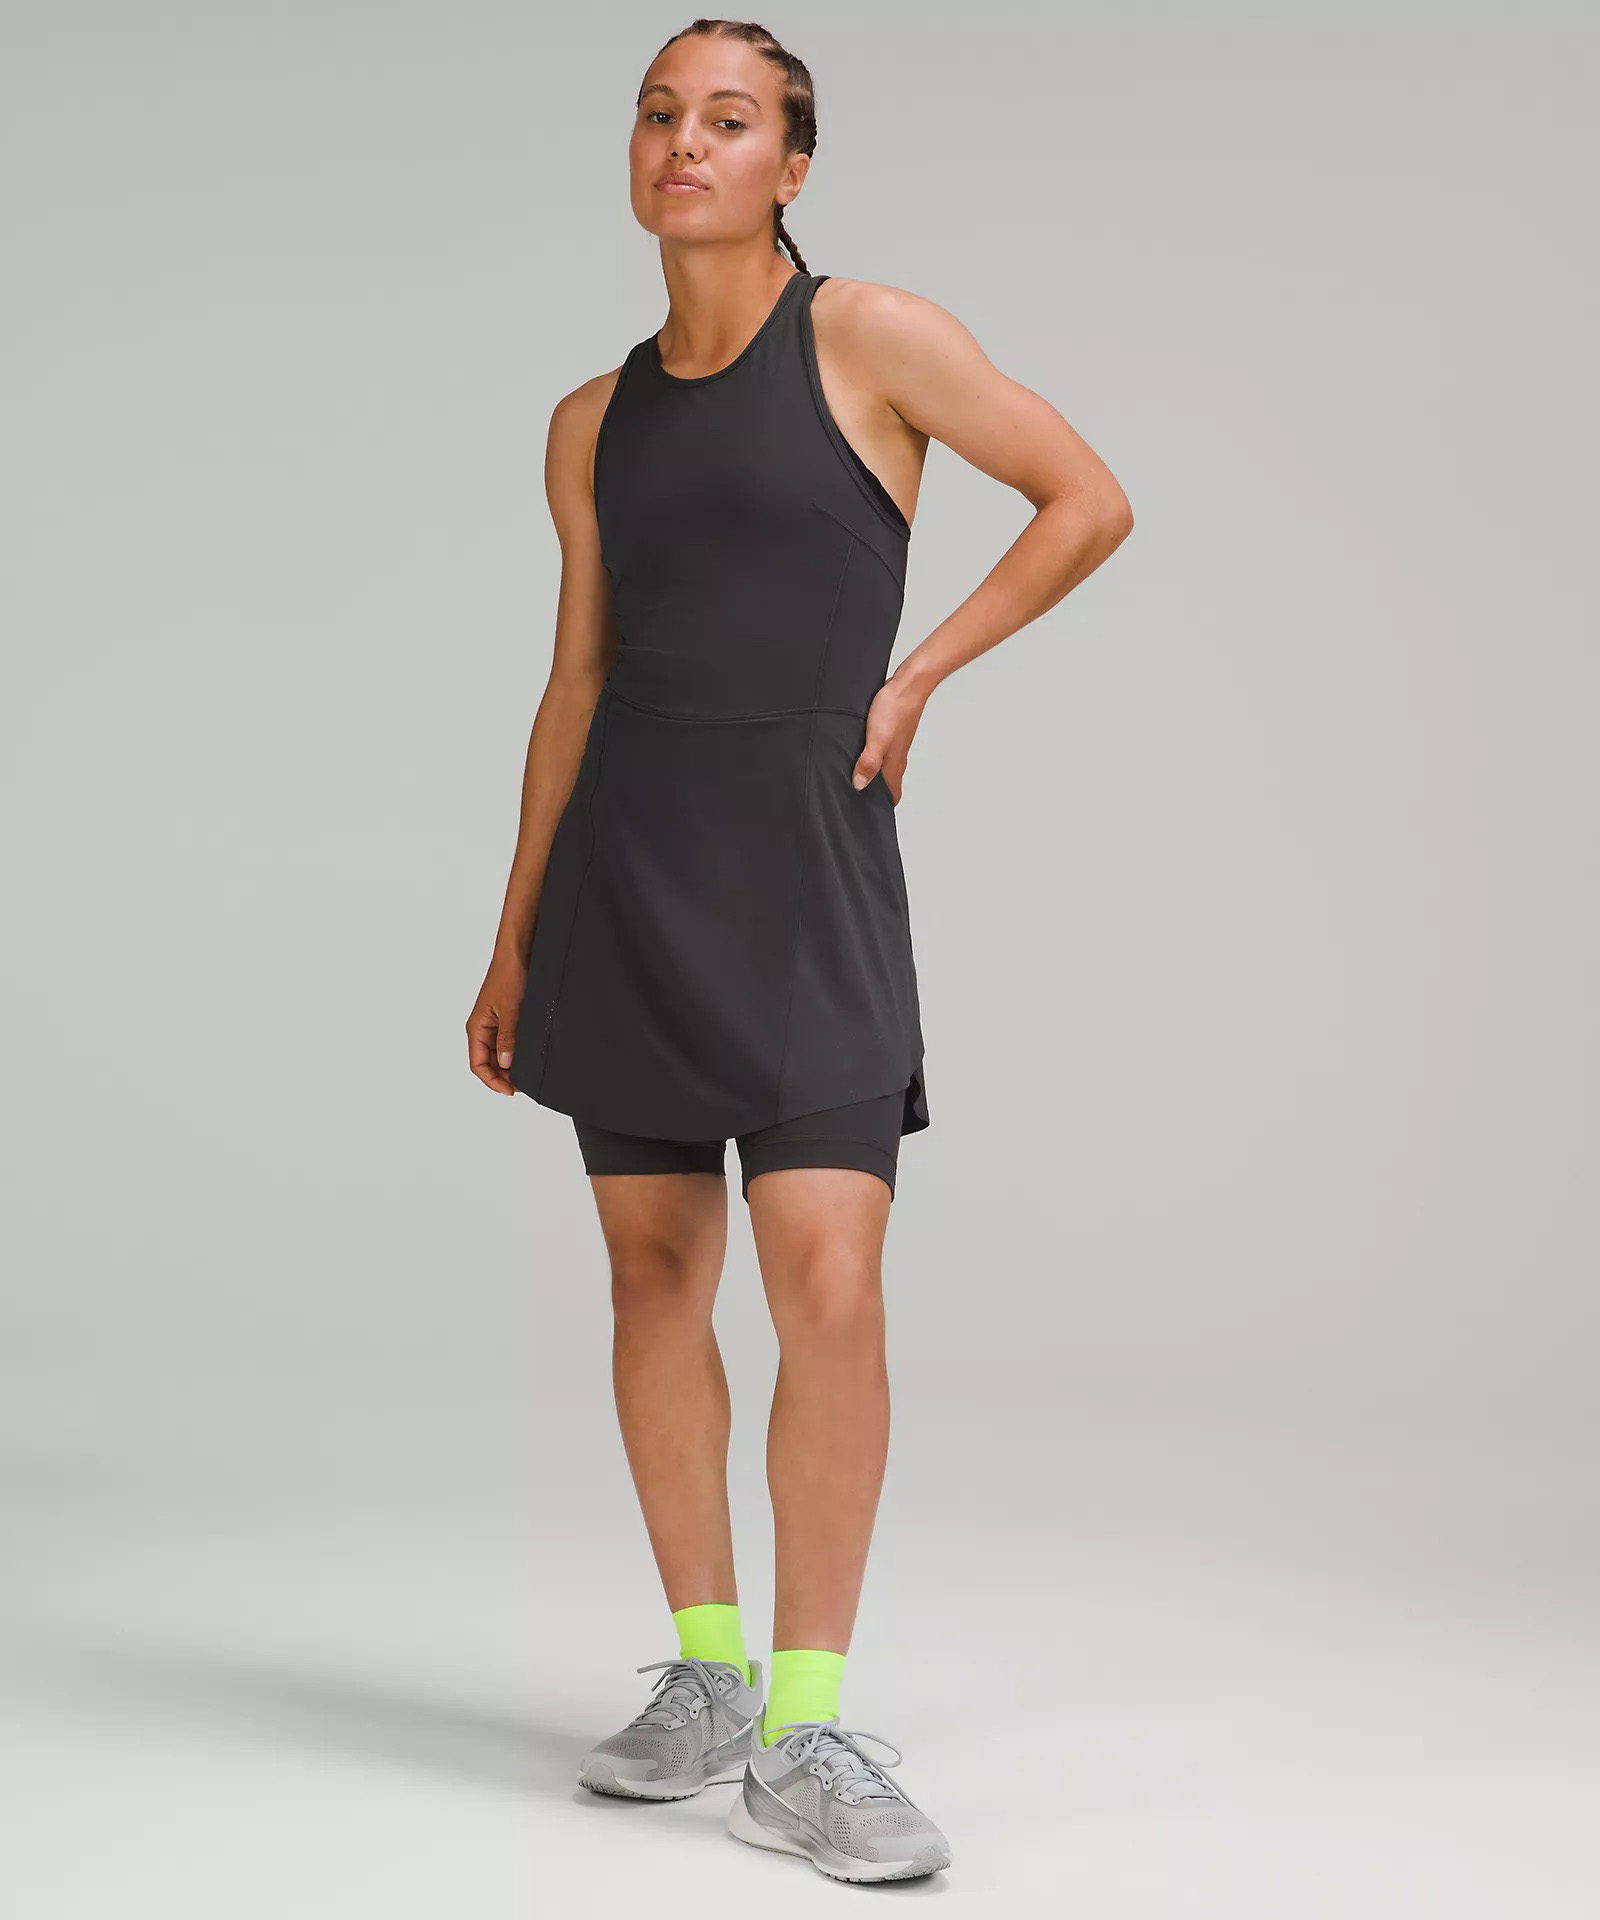 ONVIEW Women's Workout Dress Built in Shorts with 4 Pockets Sleeveless Racerback Tennis Dresses for Sport Sportwear 